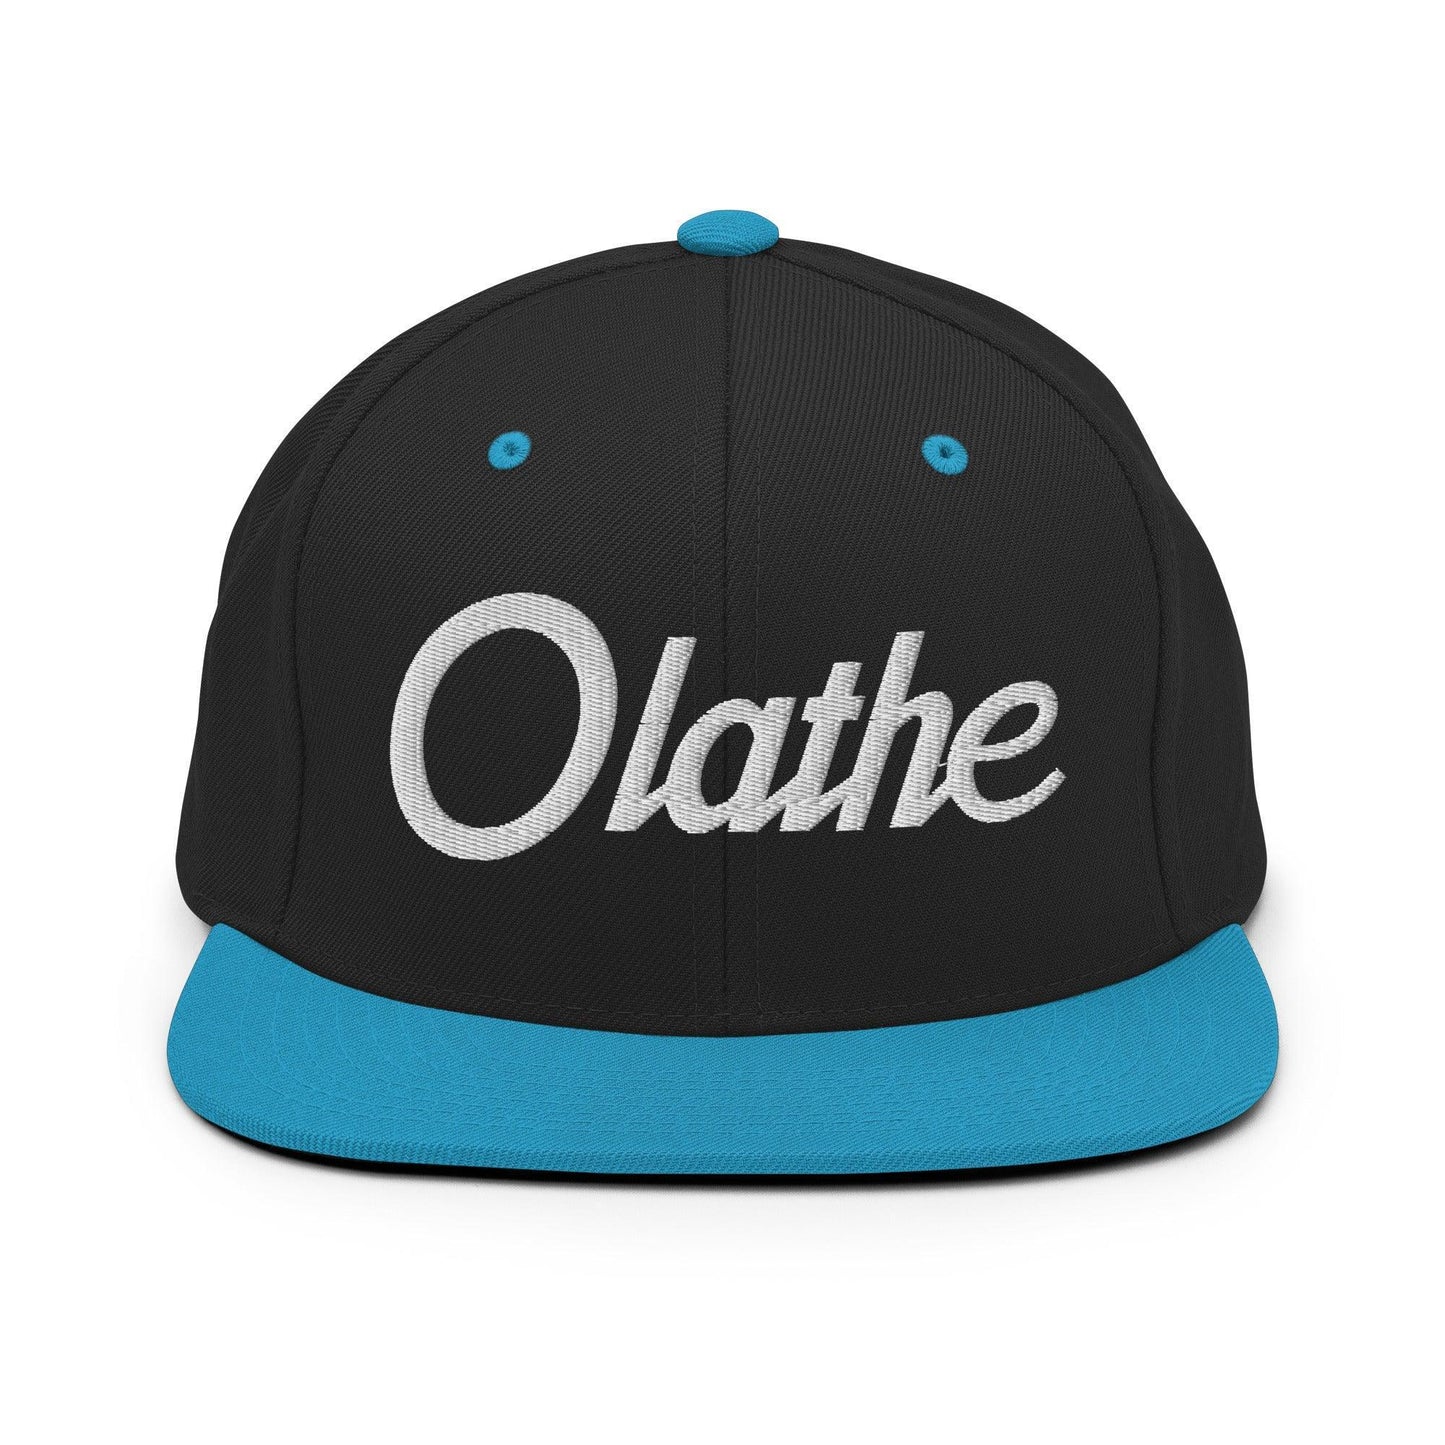 Olathe Script Snapback Hat Black Teal